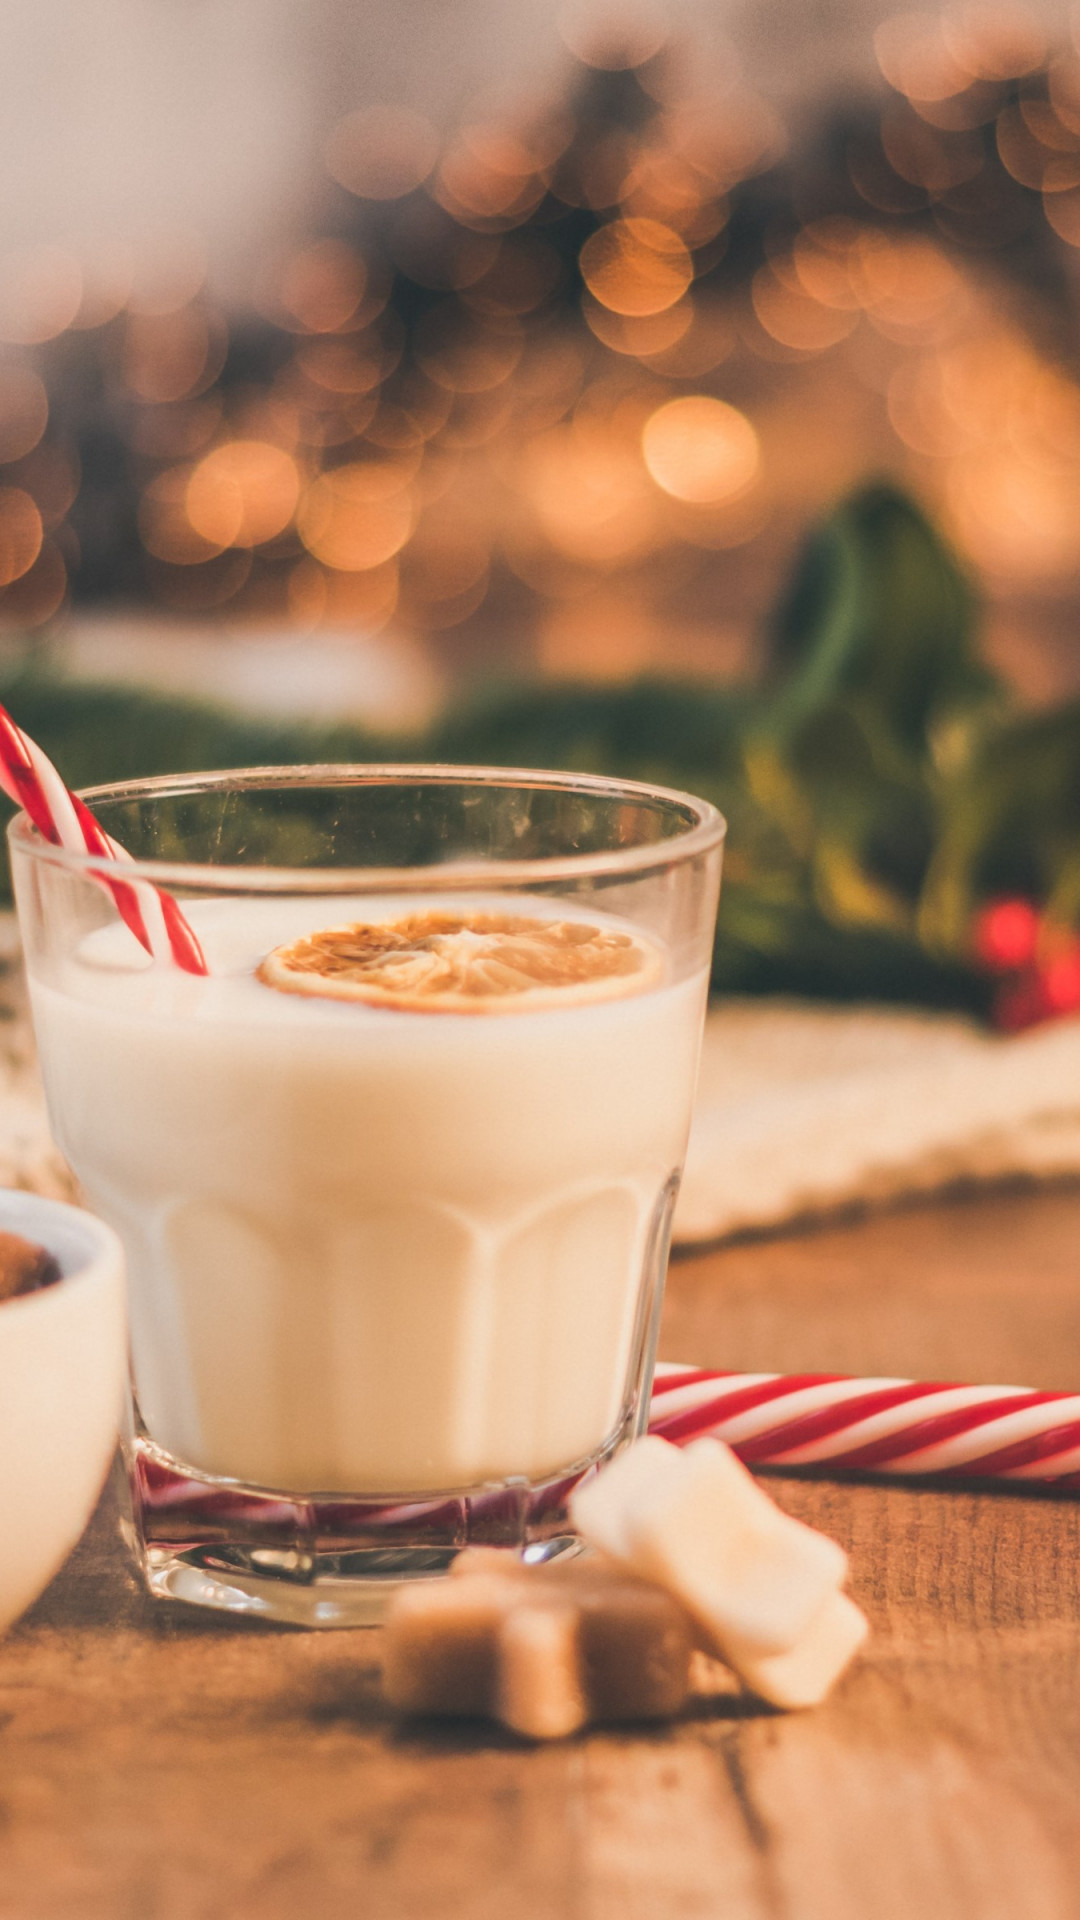 Seasonal Christmas sweets and cup of milk wallpaper 1080x1920